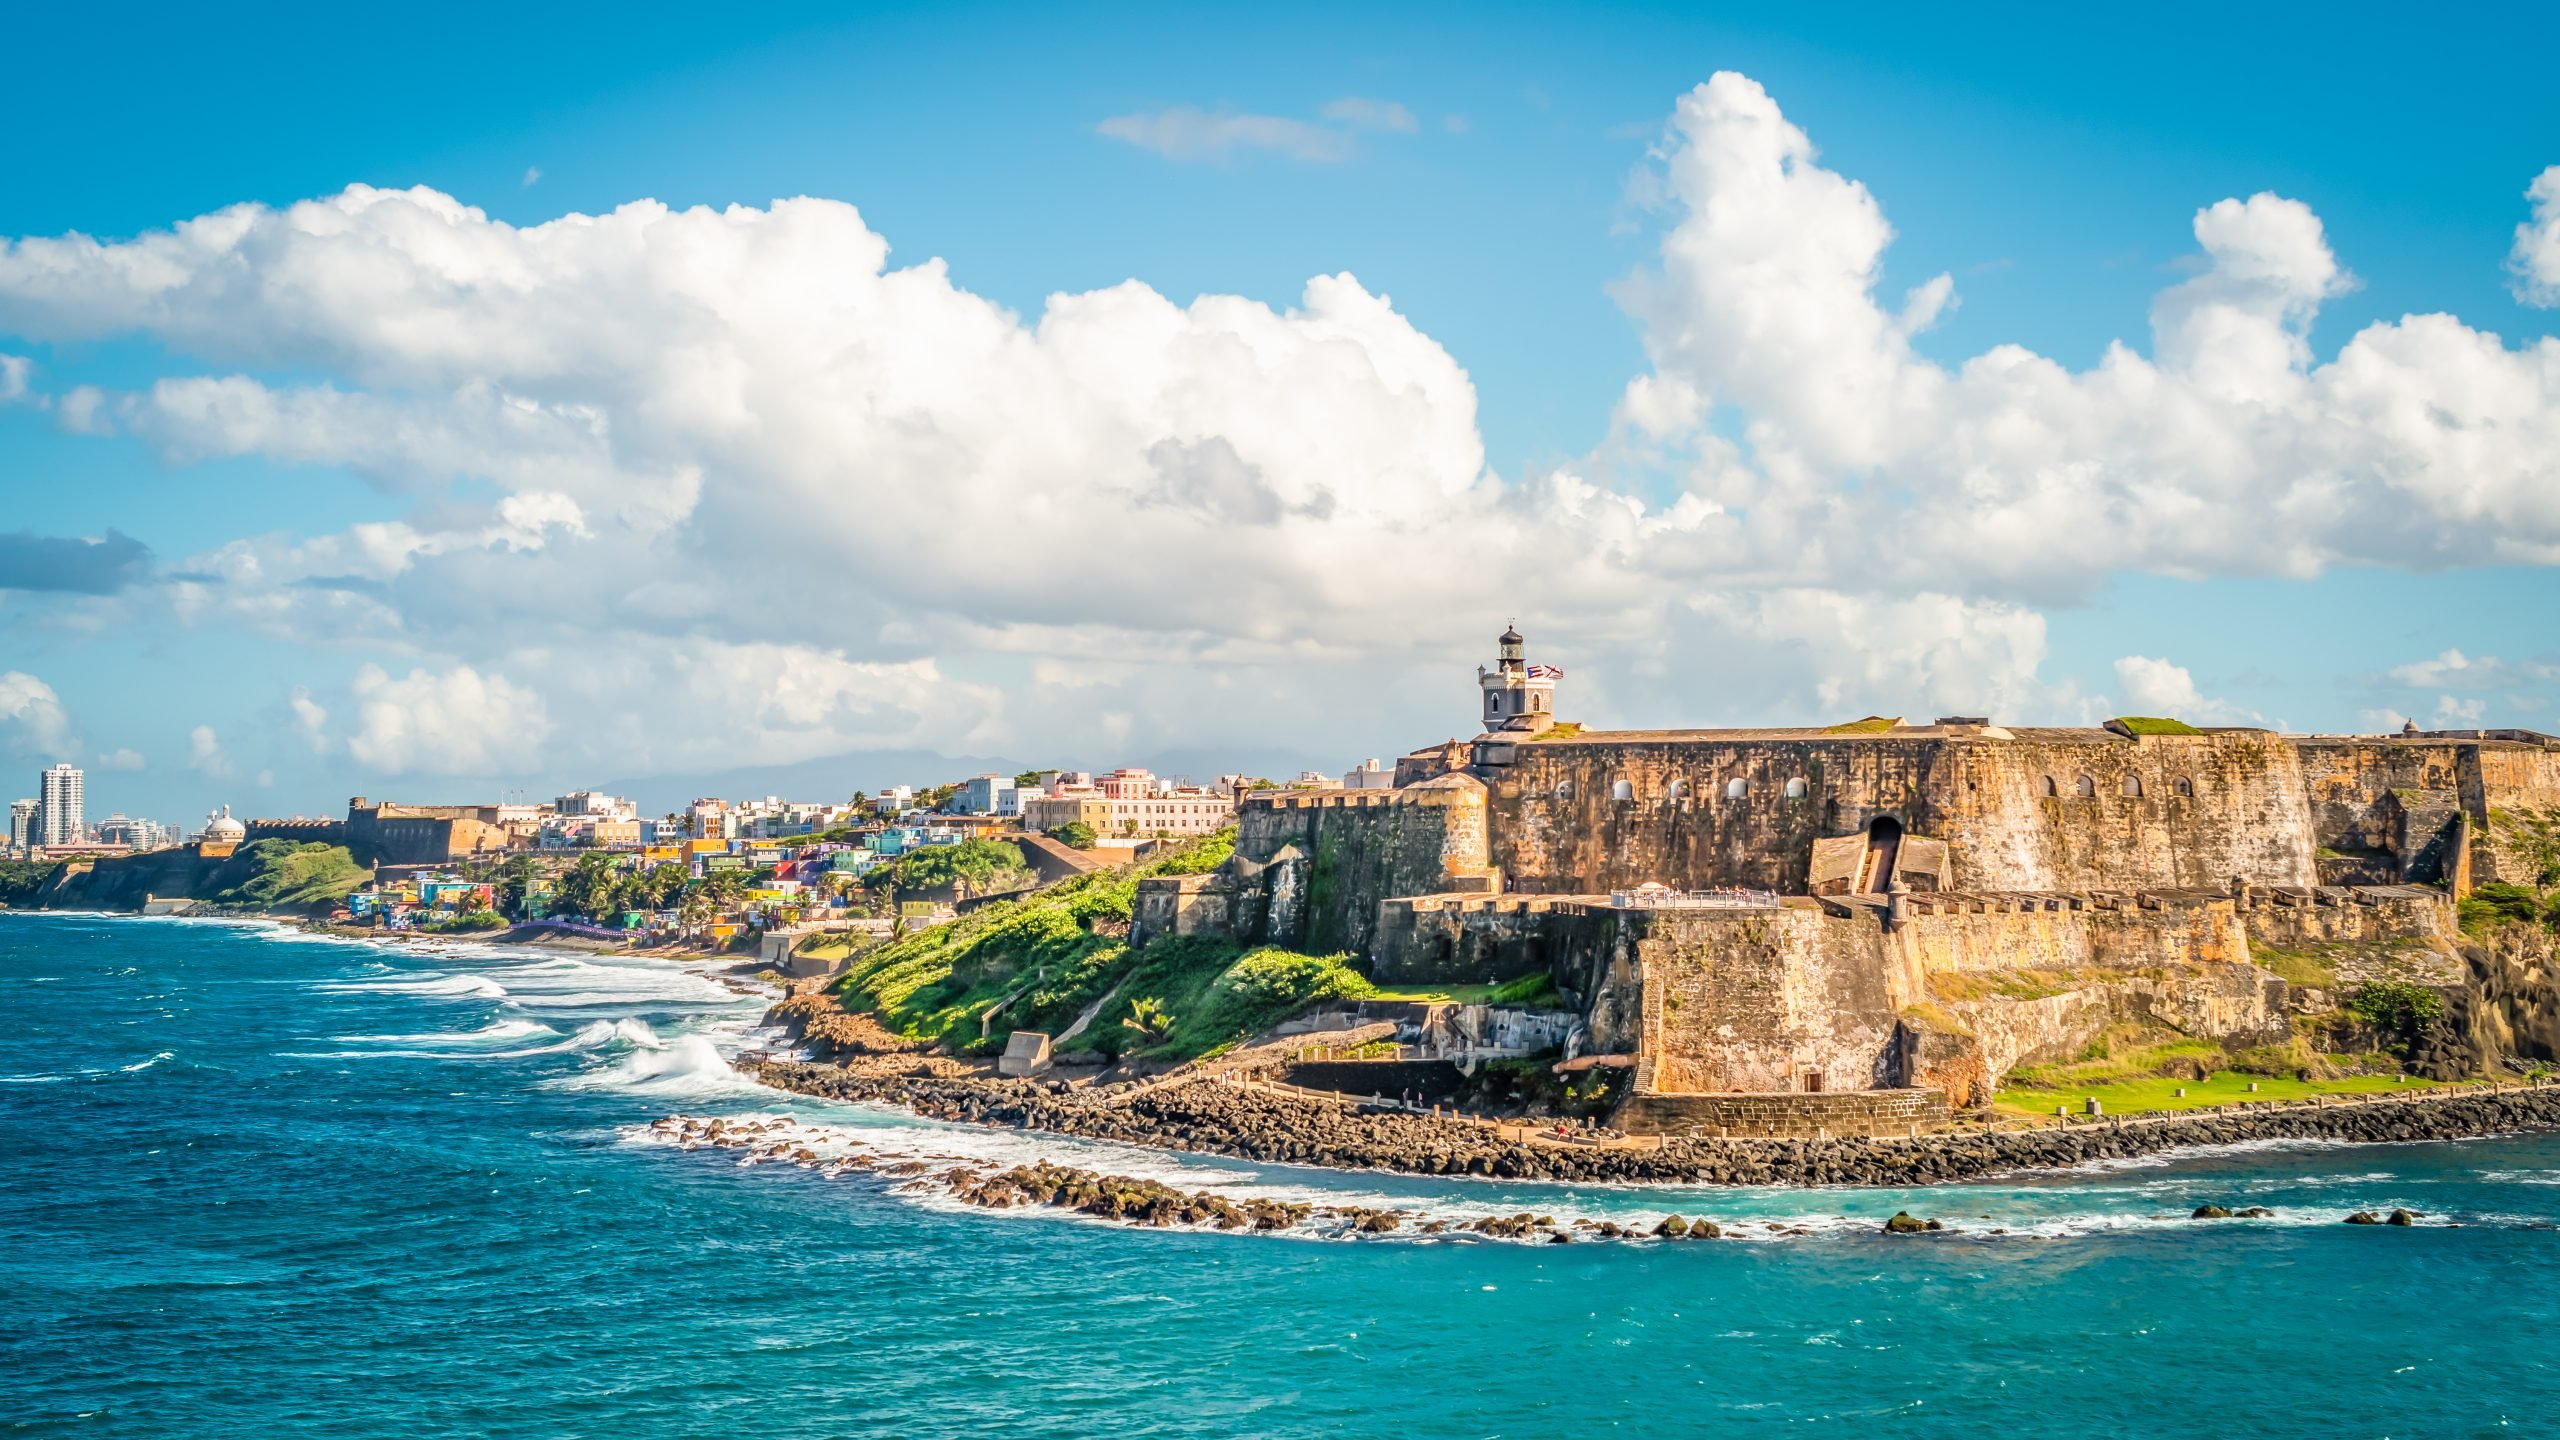 Panoramic landscape of historical castle El Morro along the coastline, San Juan, Puerto Rico.